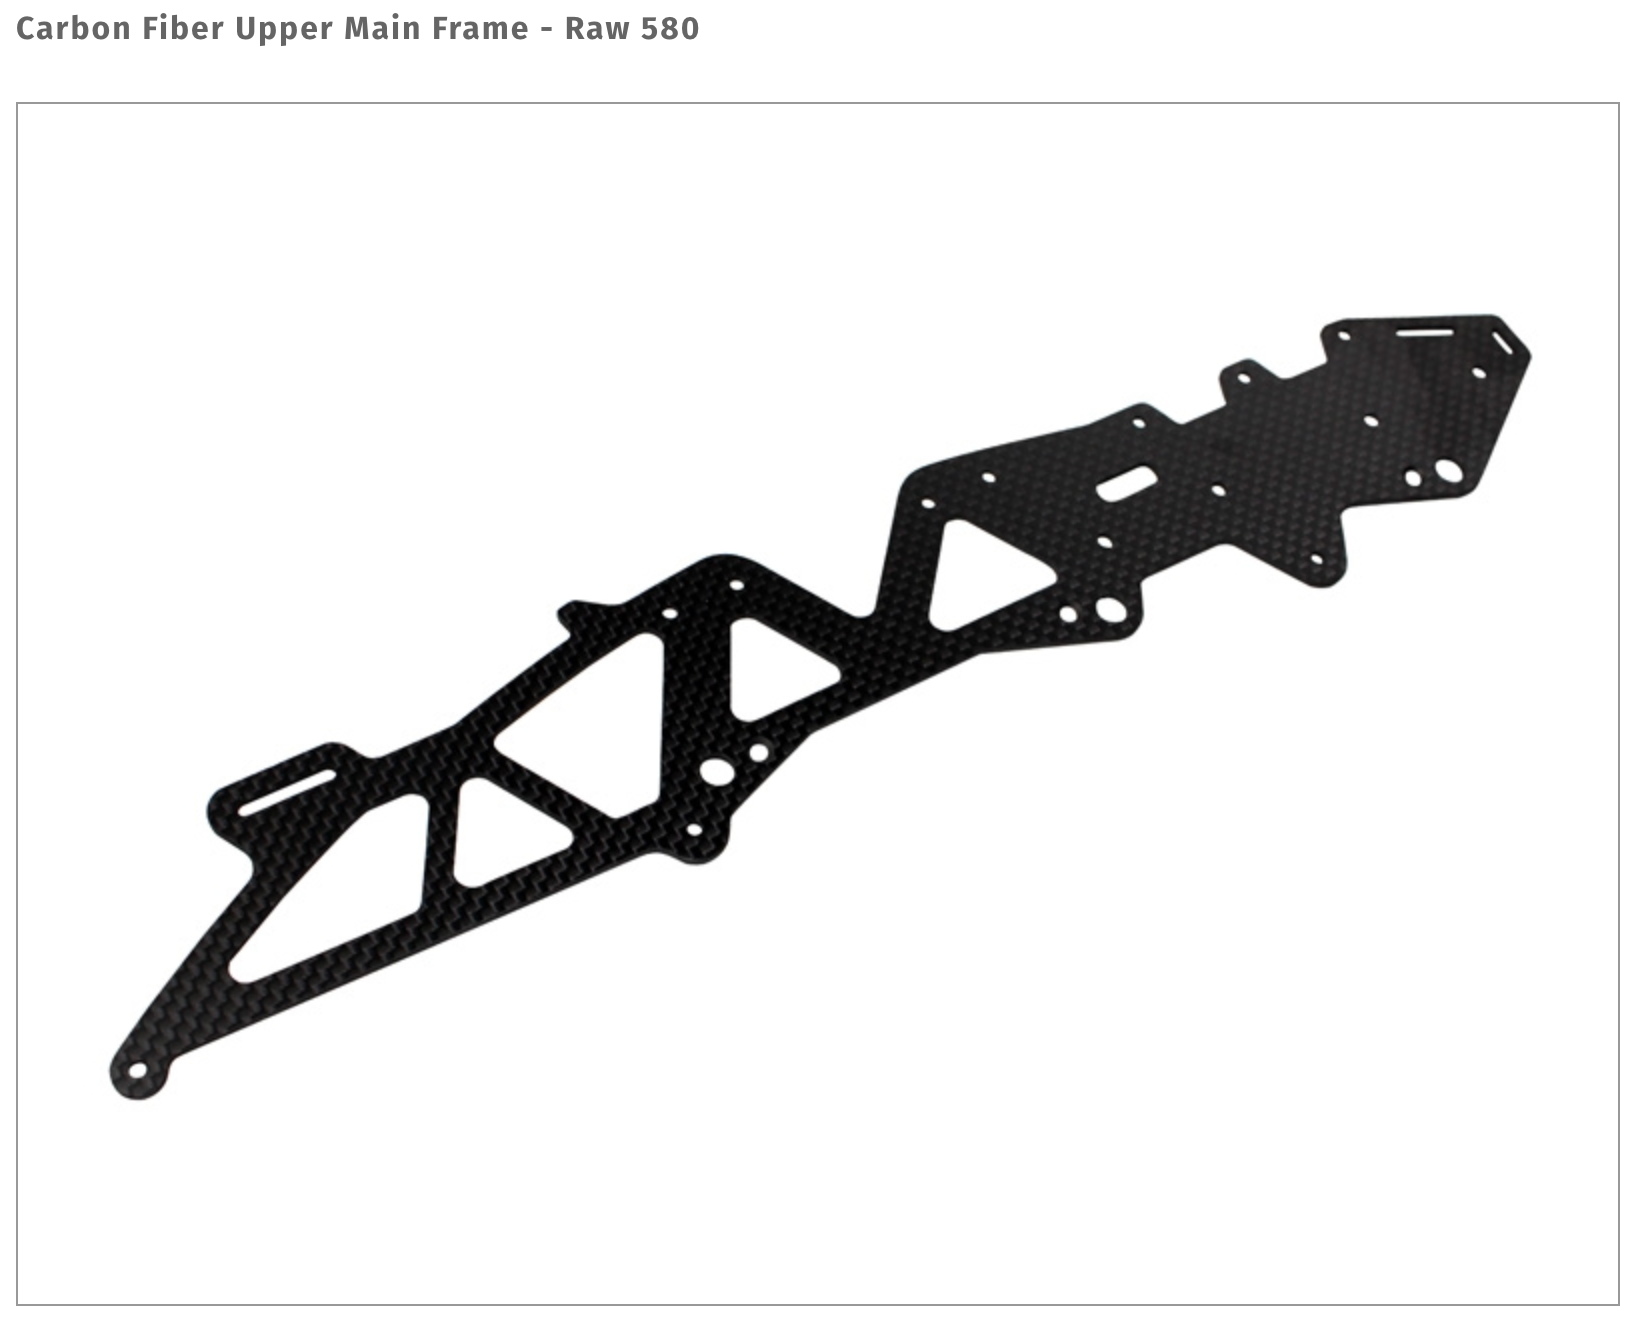 H1409-S Carbon Fiber Upper Main Frame - Raw 580